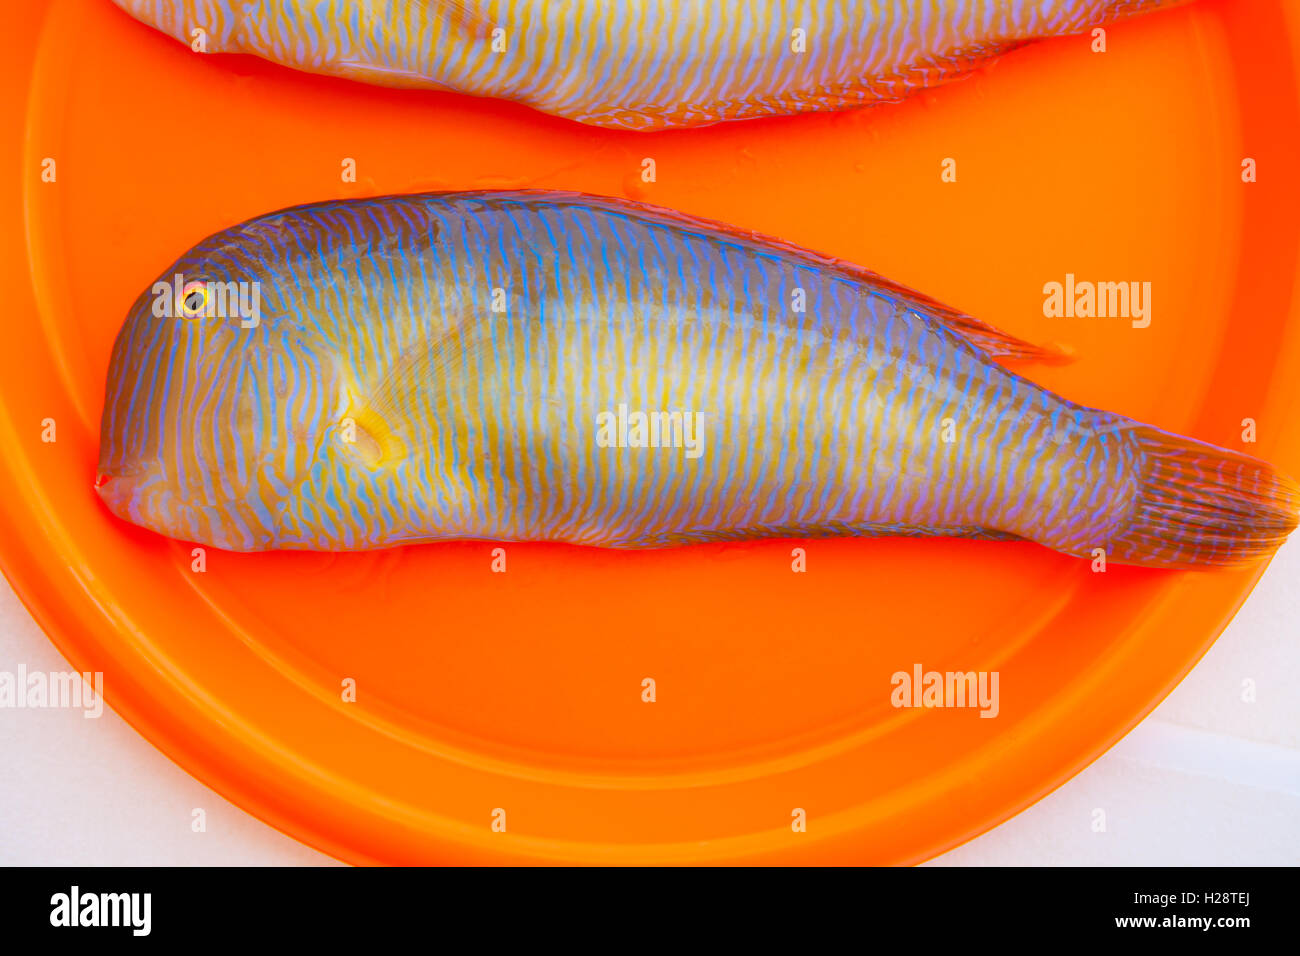 Fish Xyrichthys novacula also called Raor pearly razorfish Stock Photo